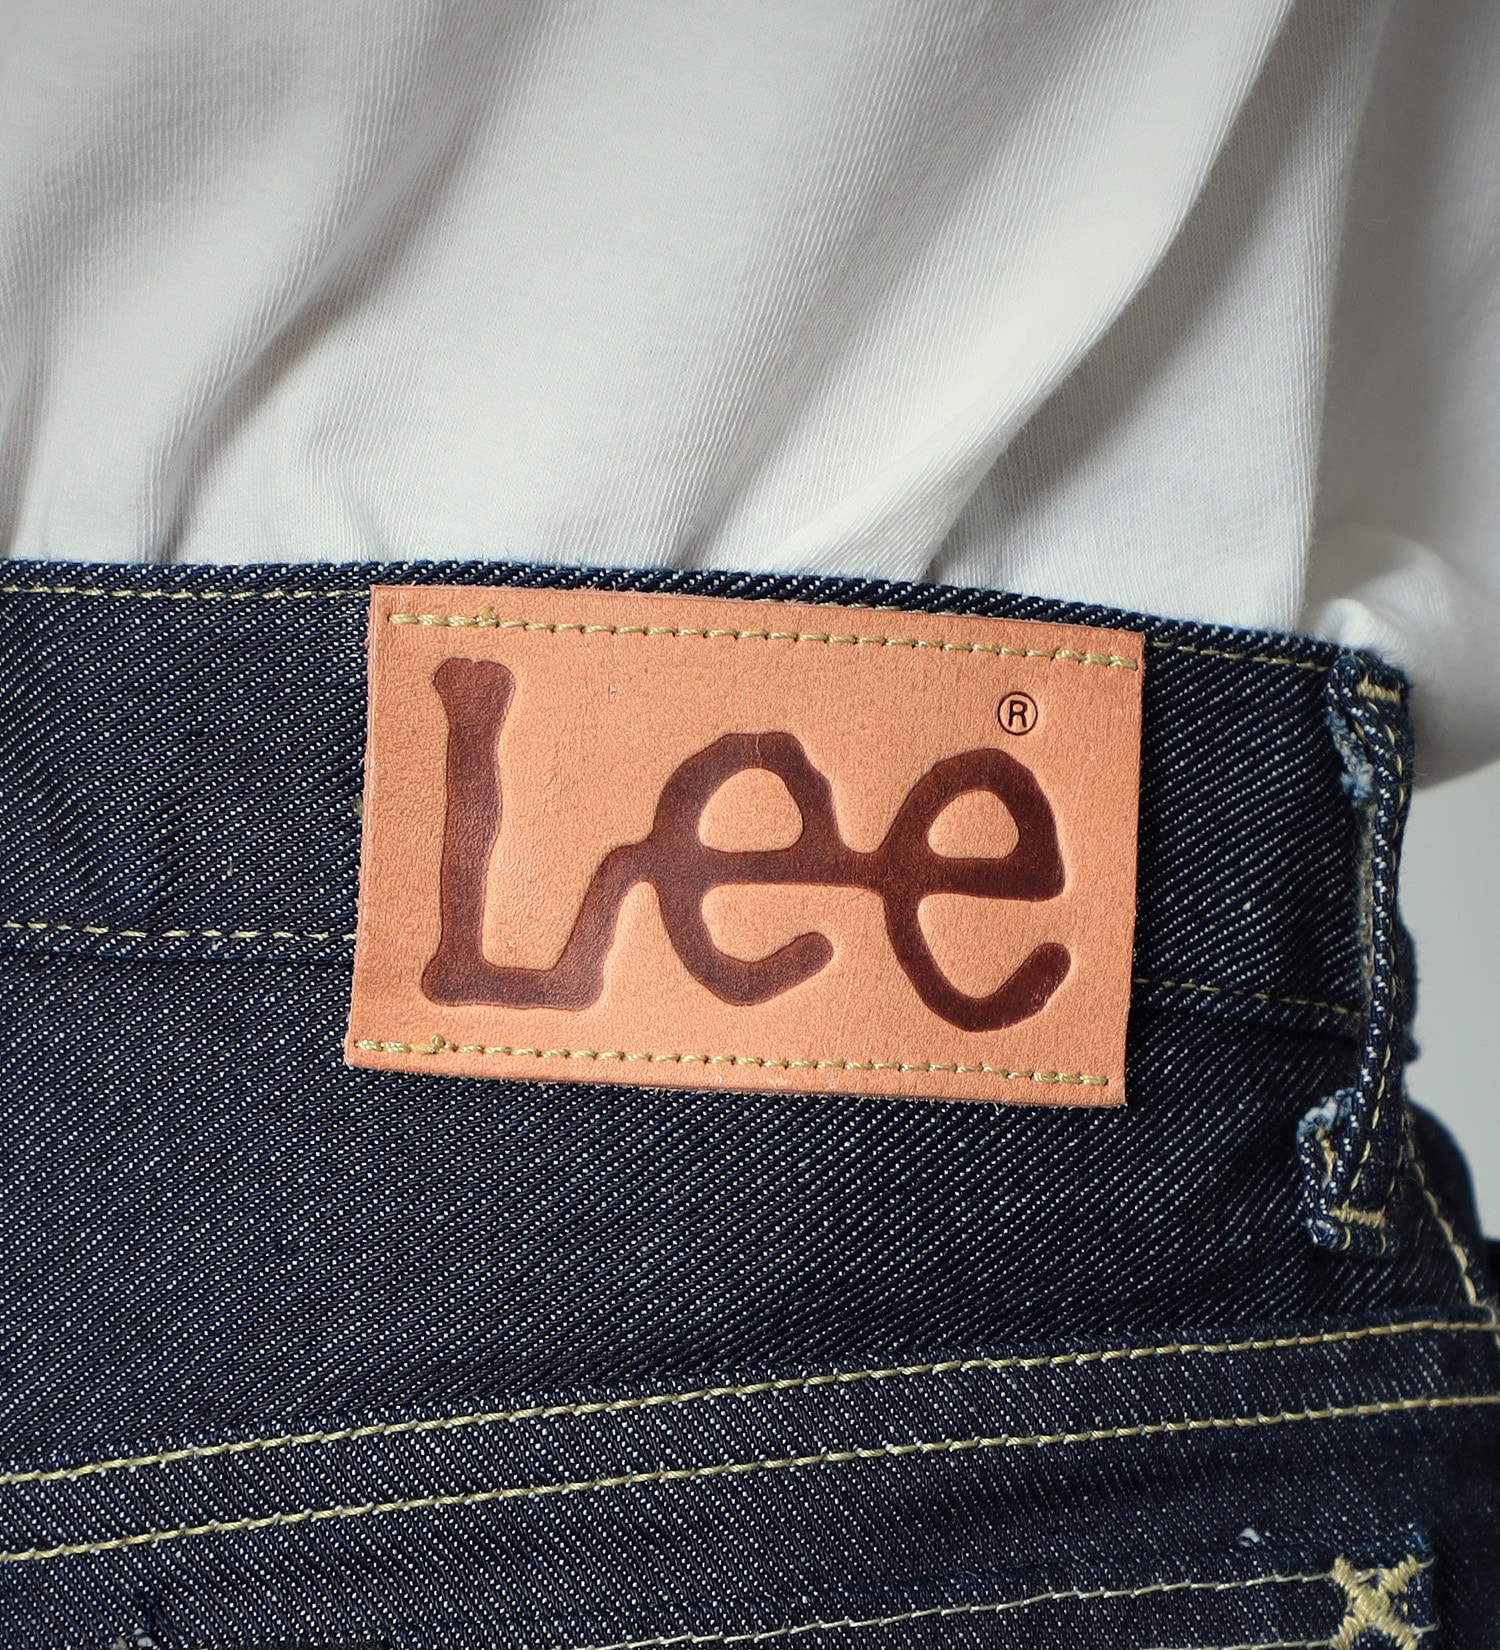 Lee(リー)のCOMPILATIONS スリムテーパードデニム|パンツ/デニムパンツ/メンズ|インディゴブルー